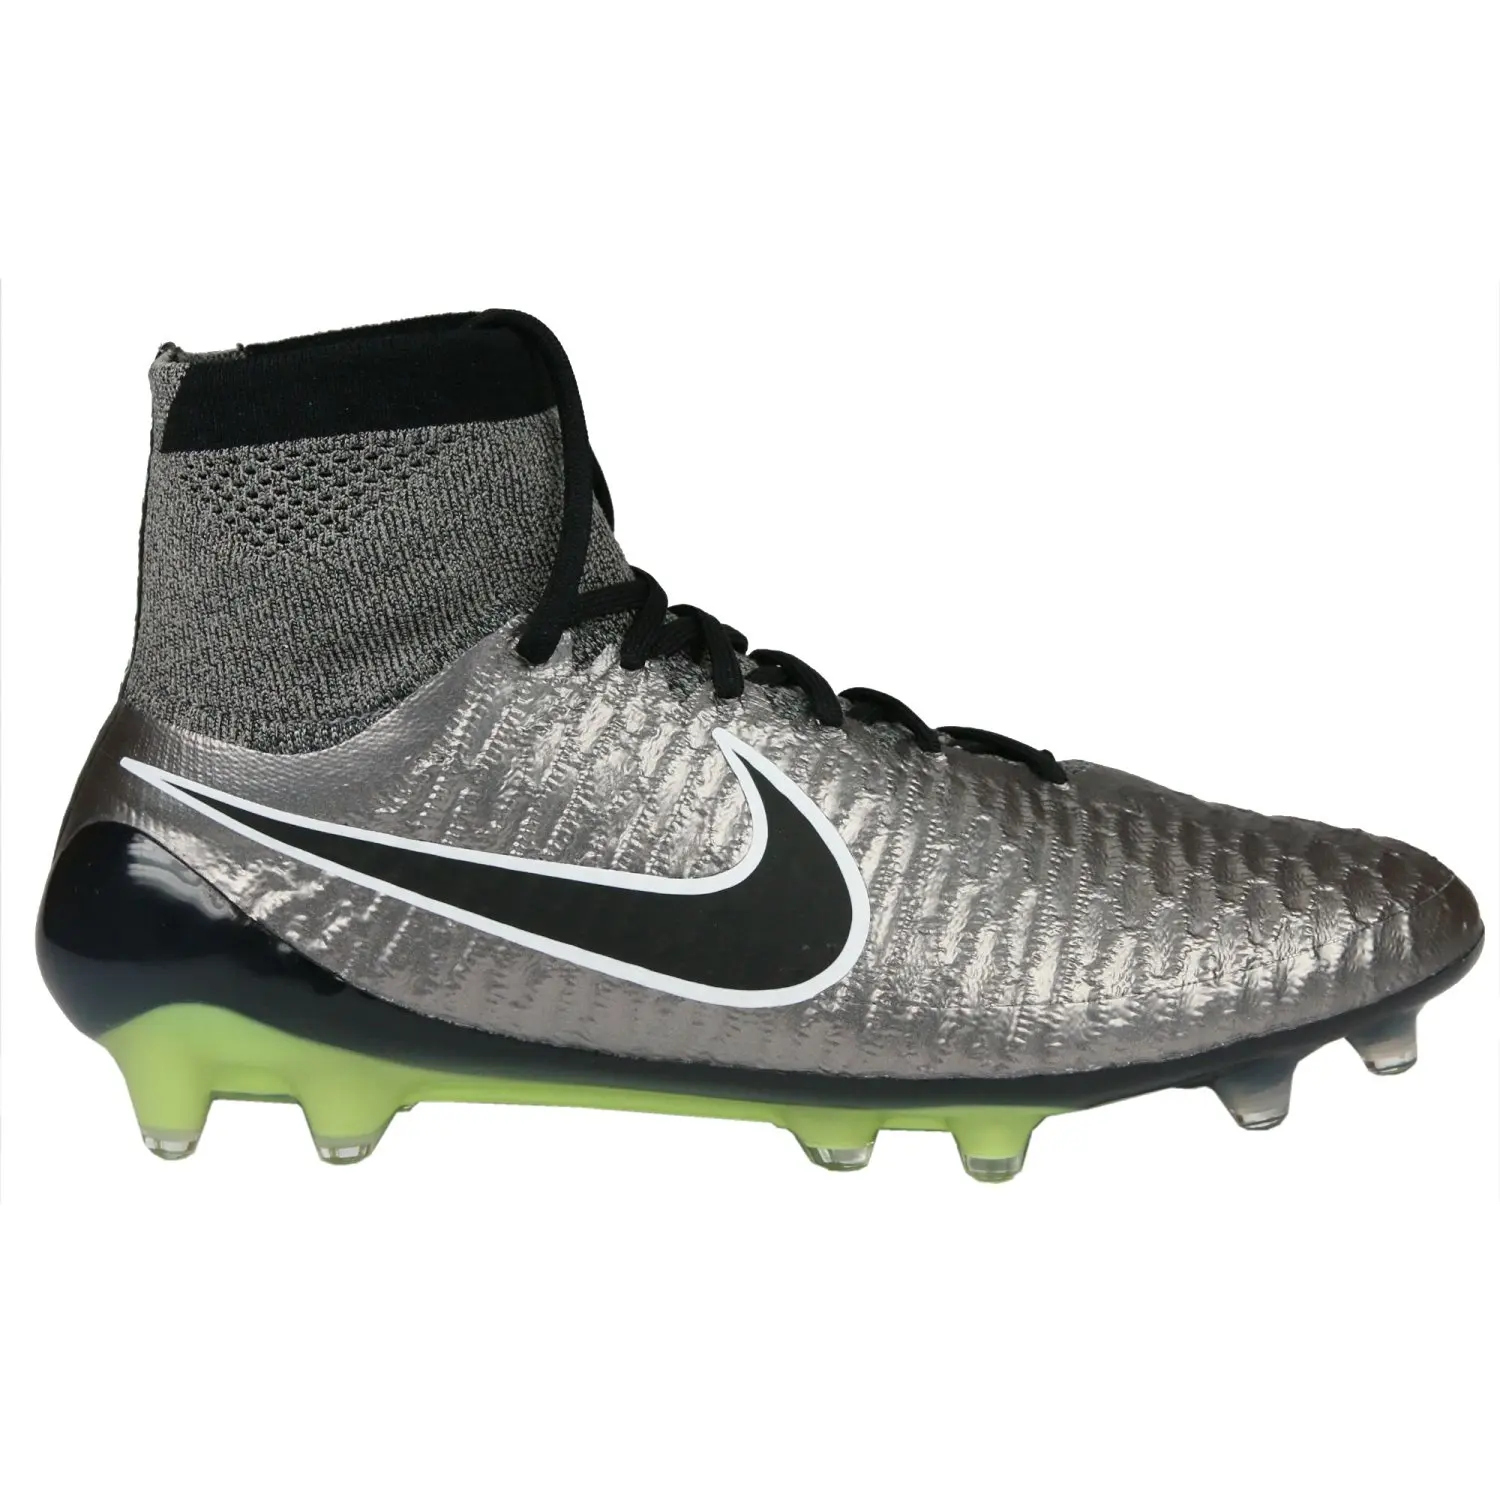 Nike Magista Football Boots at SportsDirect.com Ireland